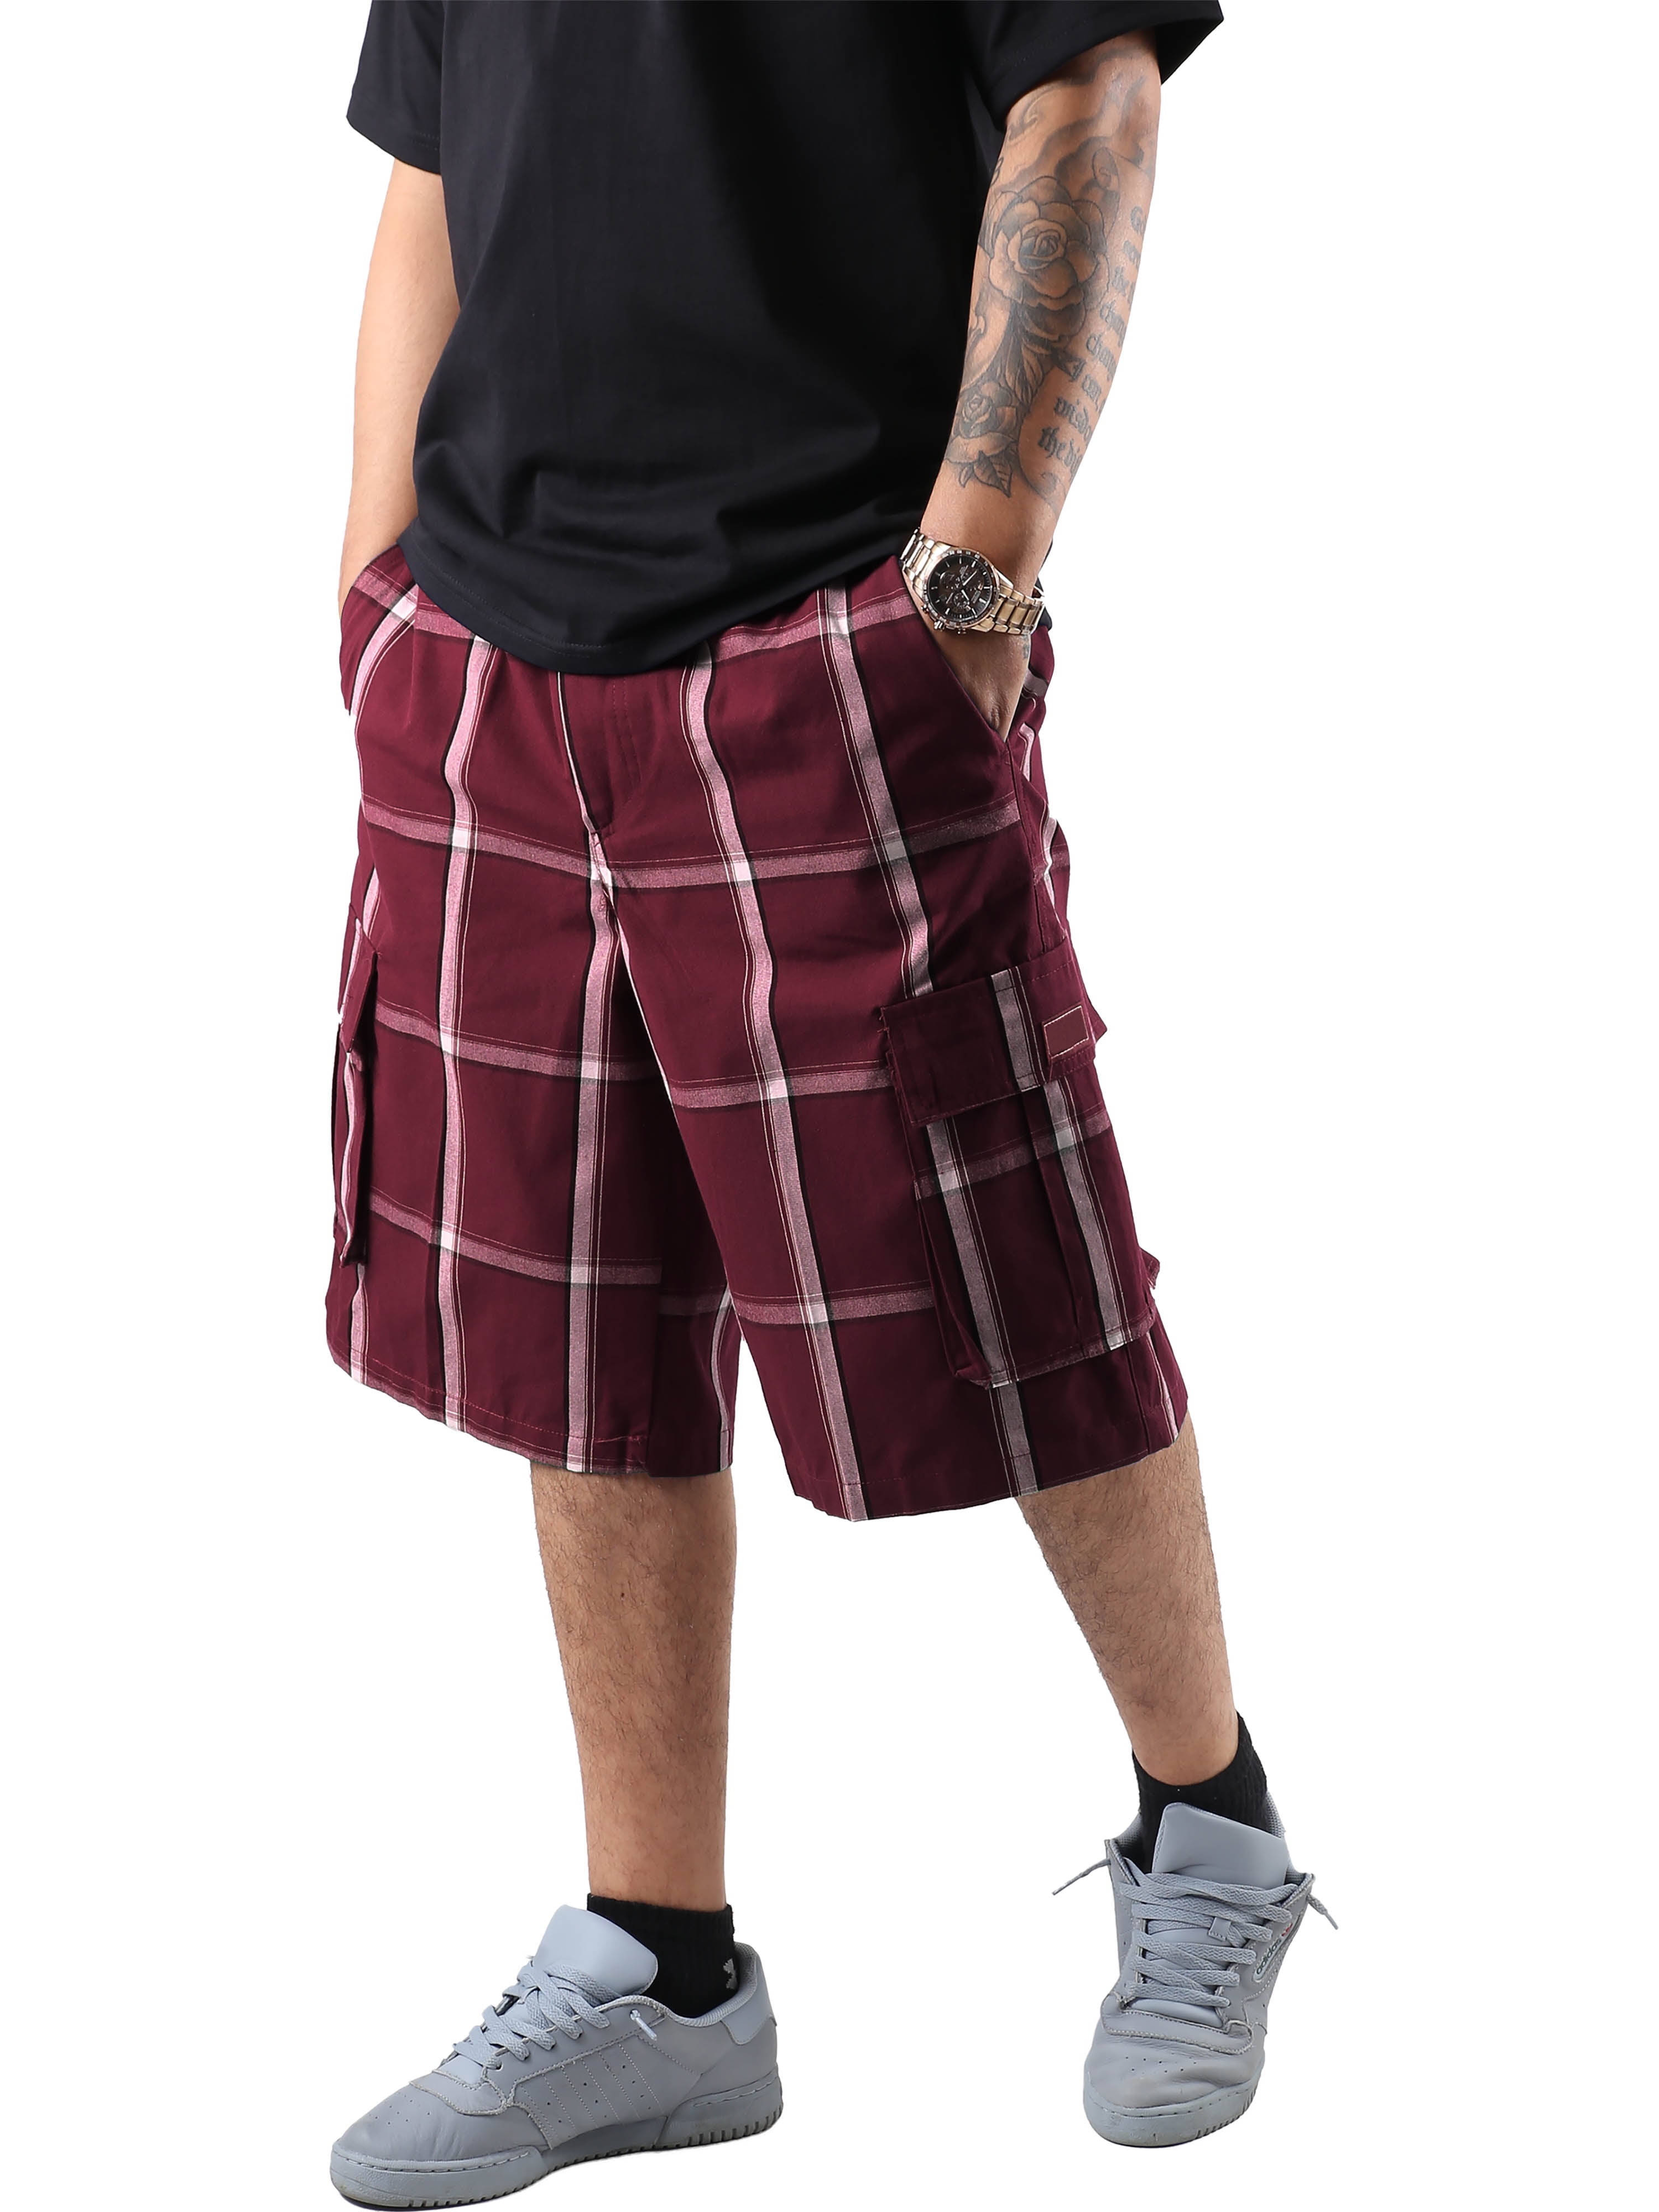 3XL New Men's Checker Plaid Shorts Loose Fitting Short Cotton Pants Size S 